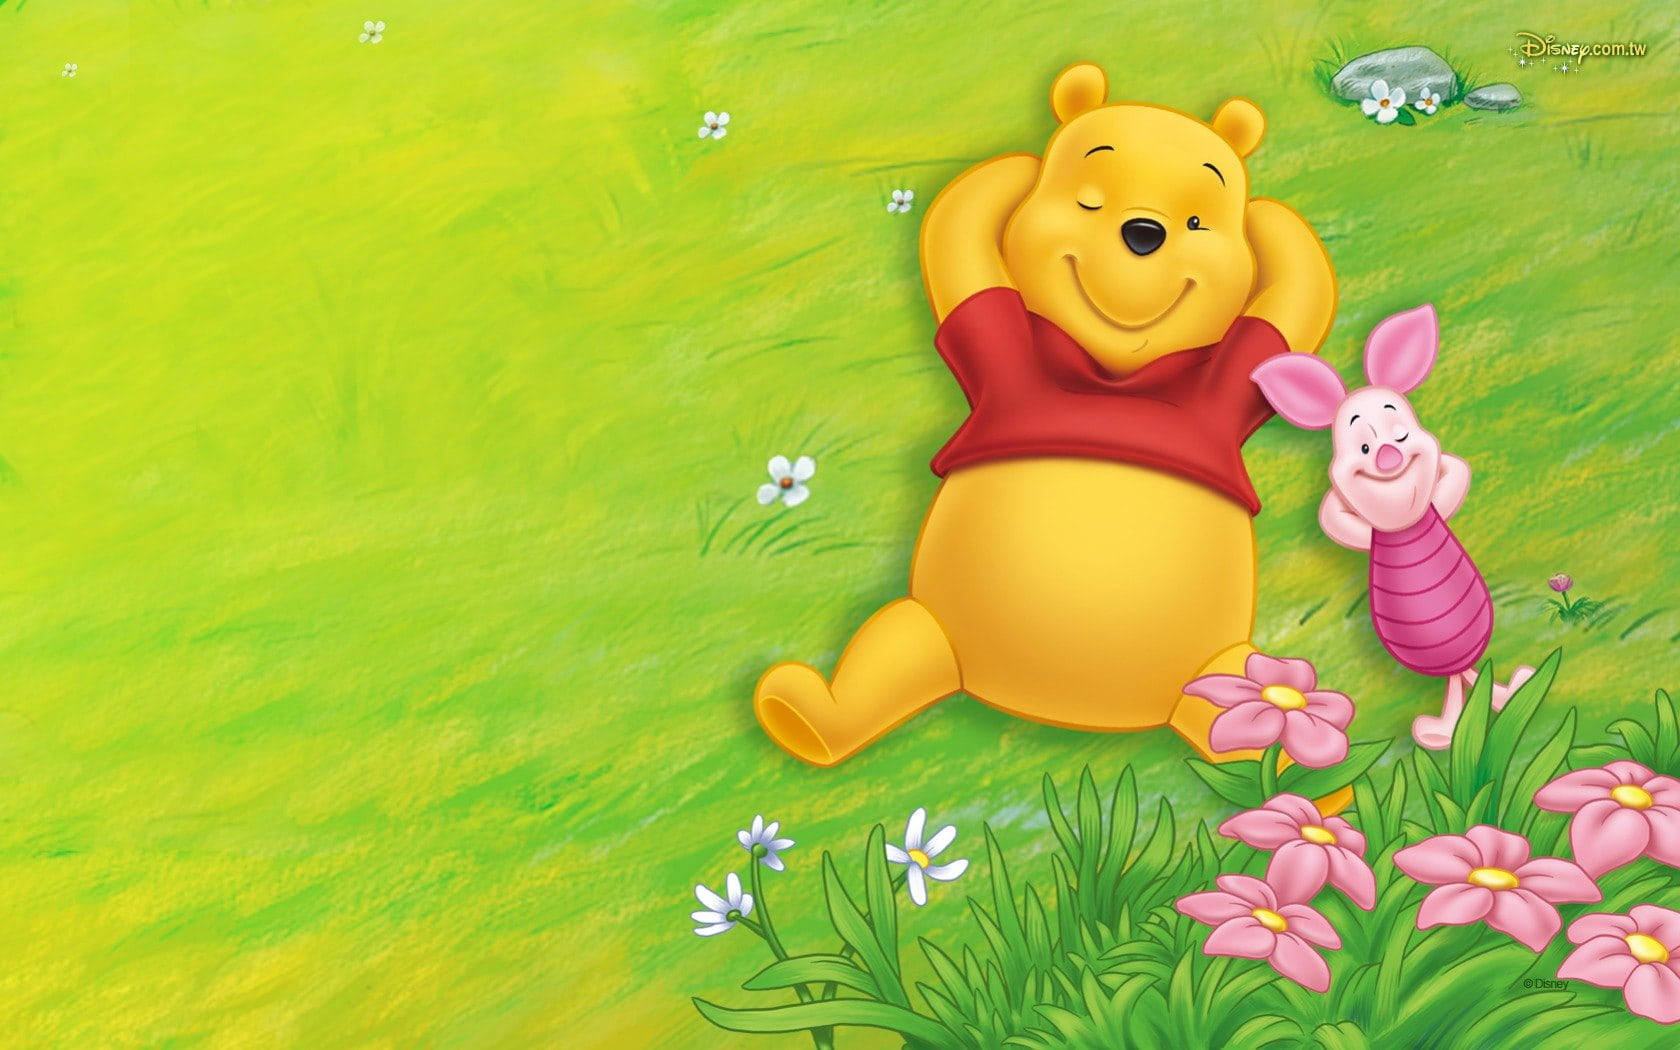 Cute Winnie The Pooh Lying In Grass